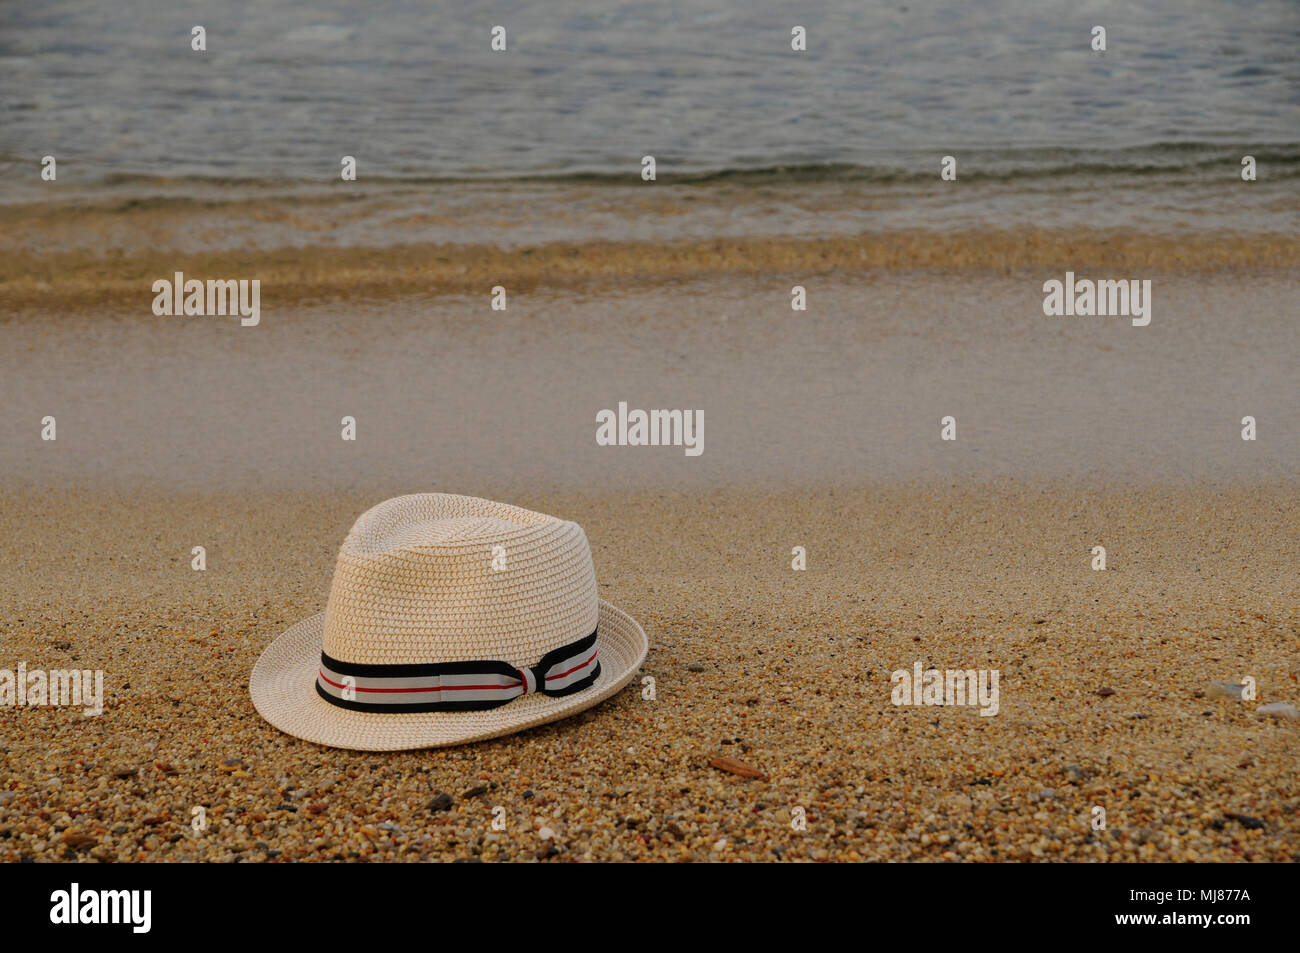 White hat on the sandy beach Stock Photo